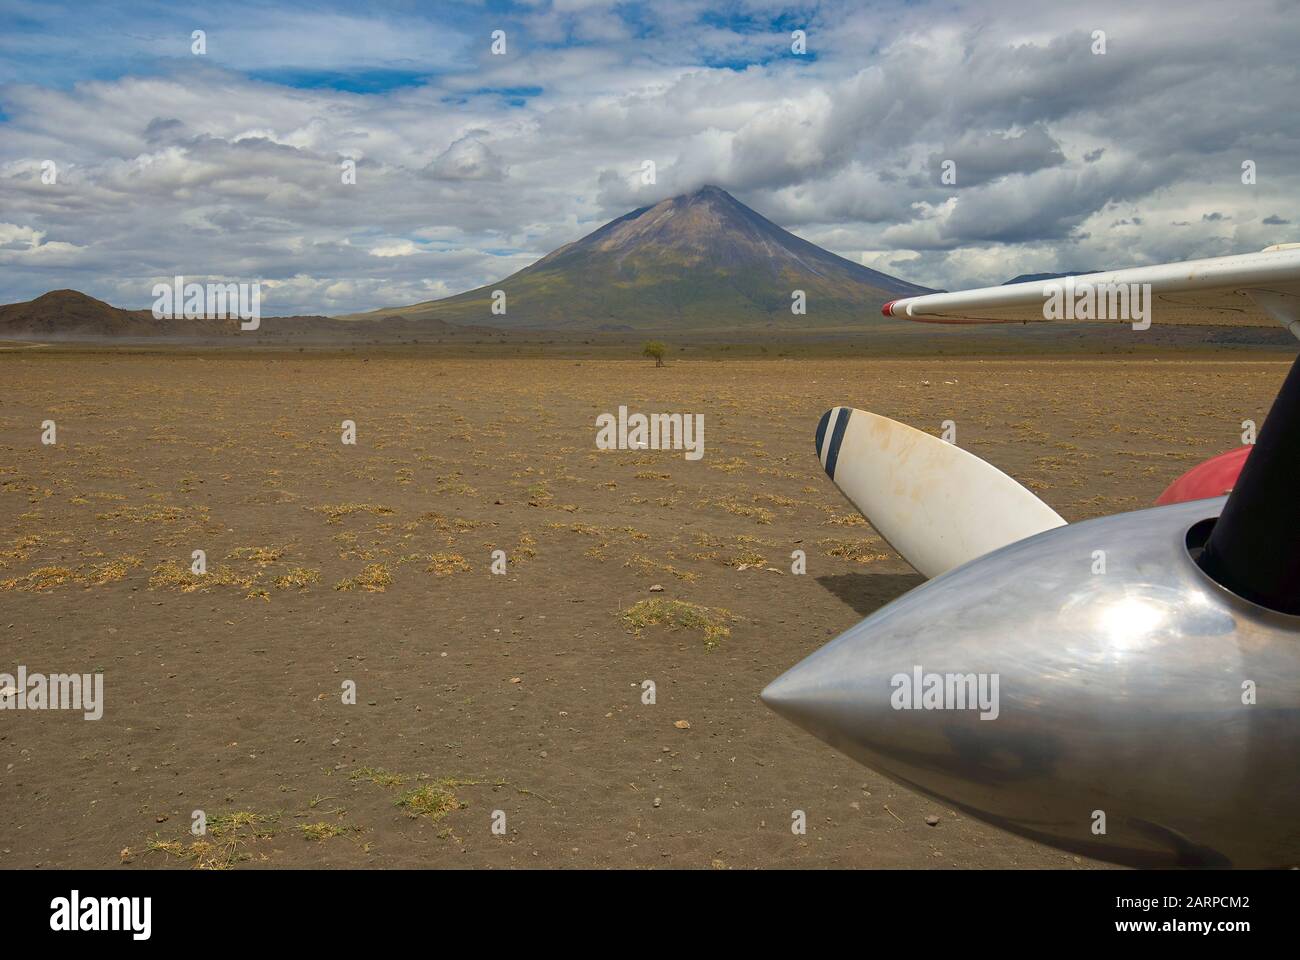 A Cessna 206 on the ground at Engaresero airstrip, next to the volcano Oldoinyo Lengai (Tanzania) Stock Photo